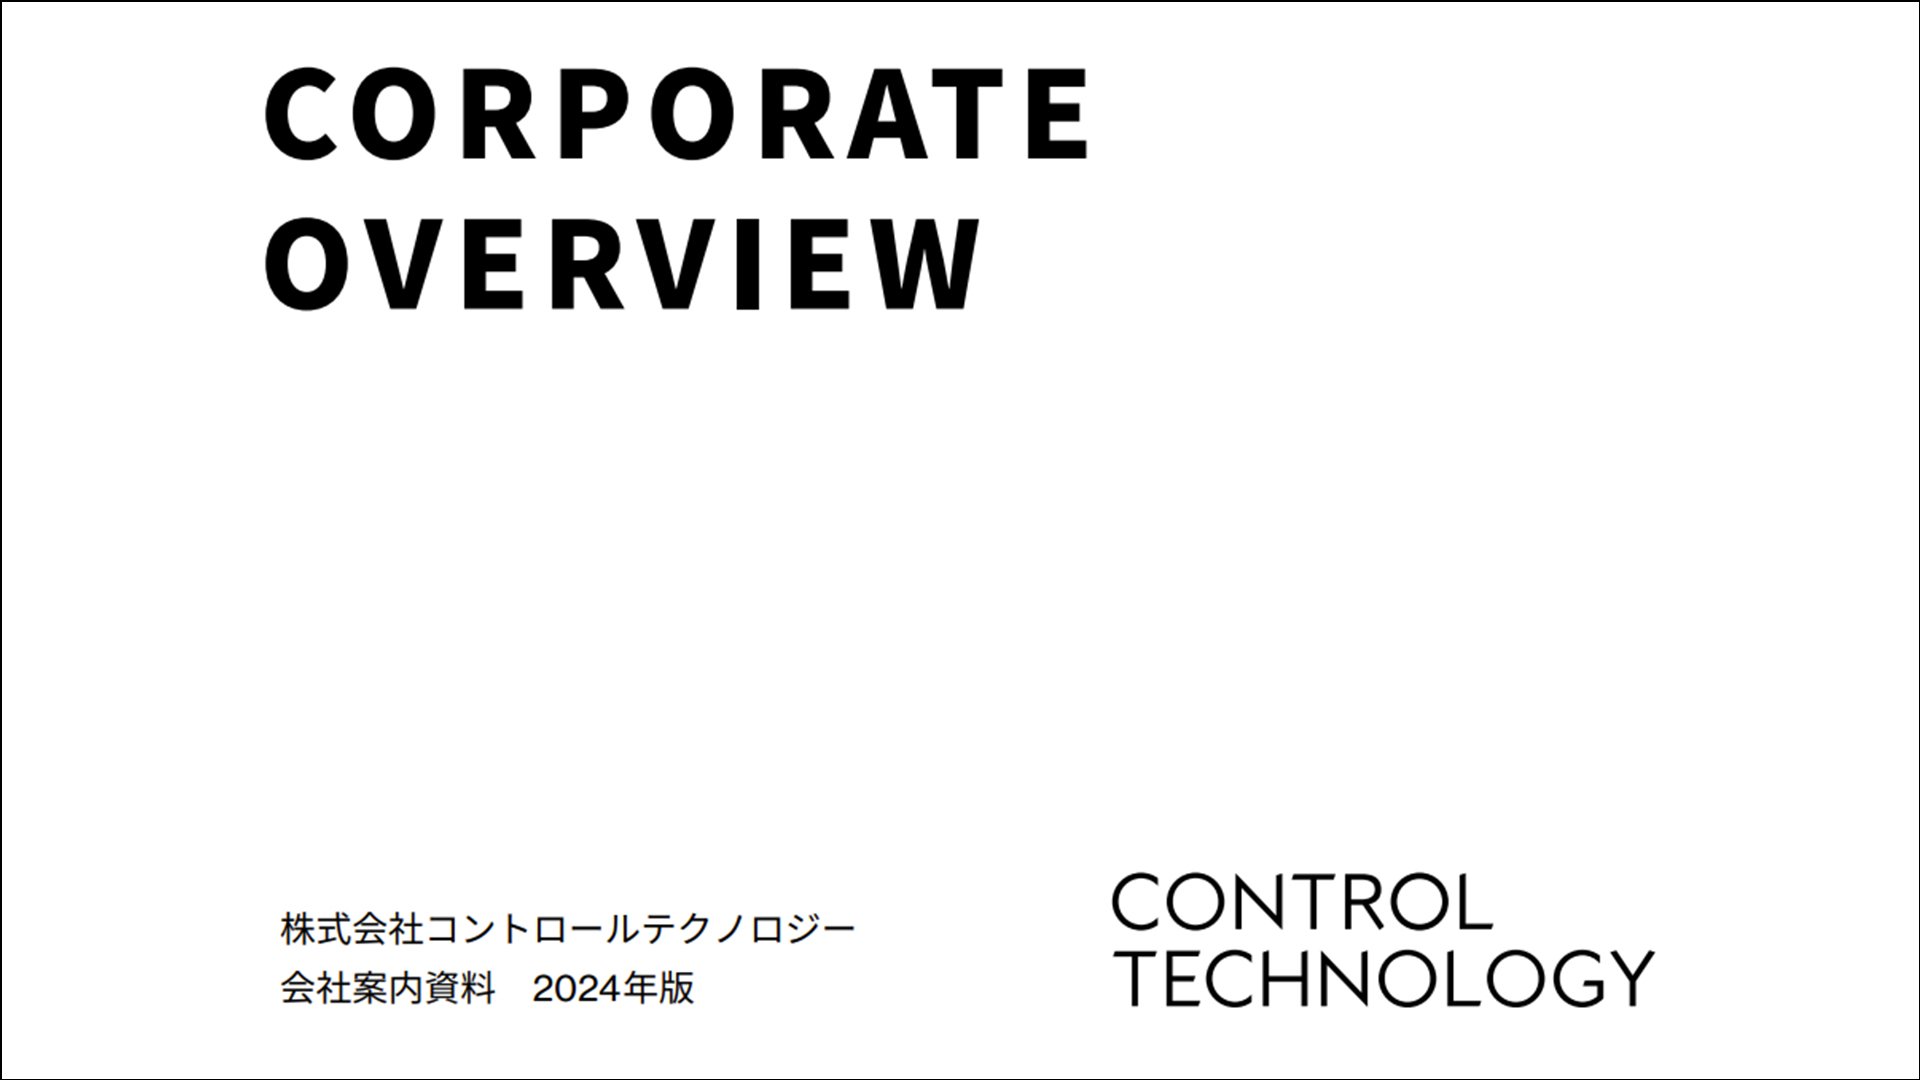 Control Technology Company Brochure 3